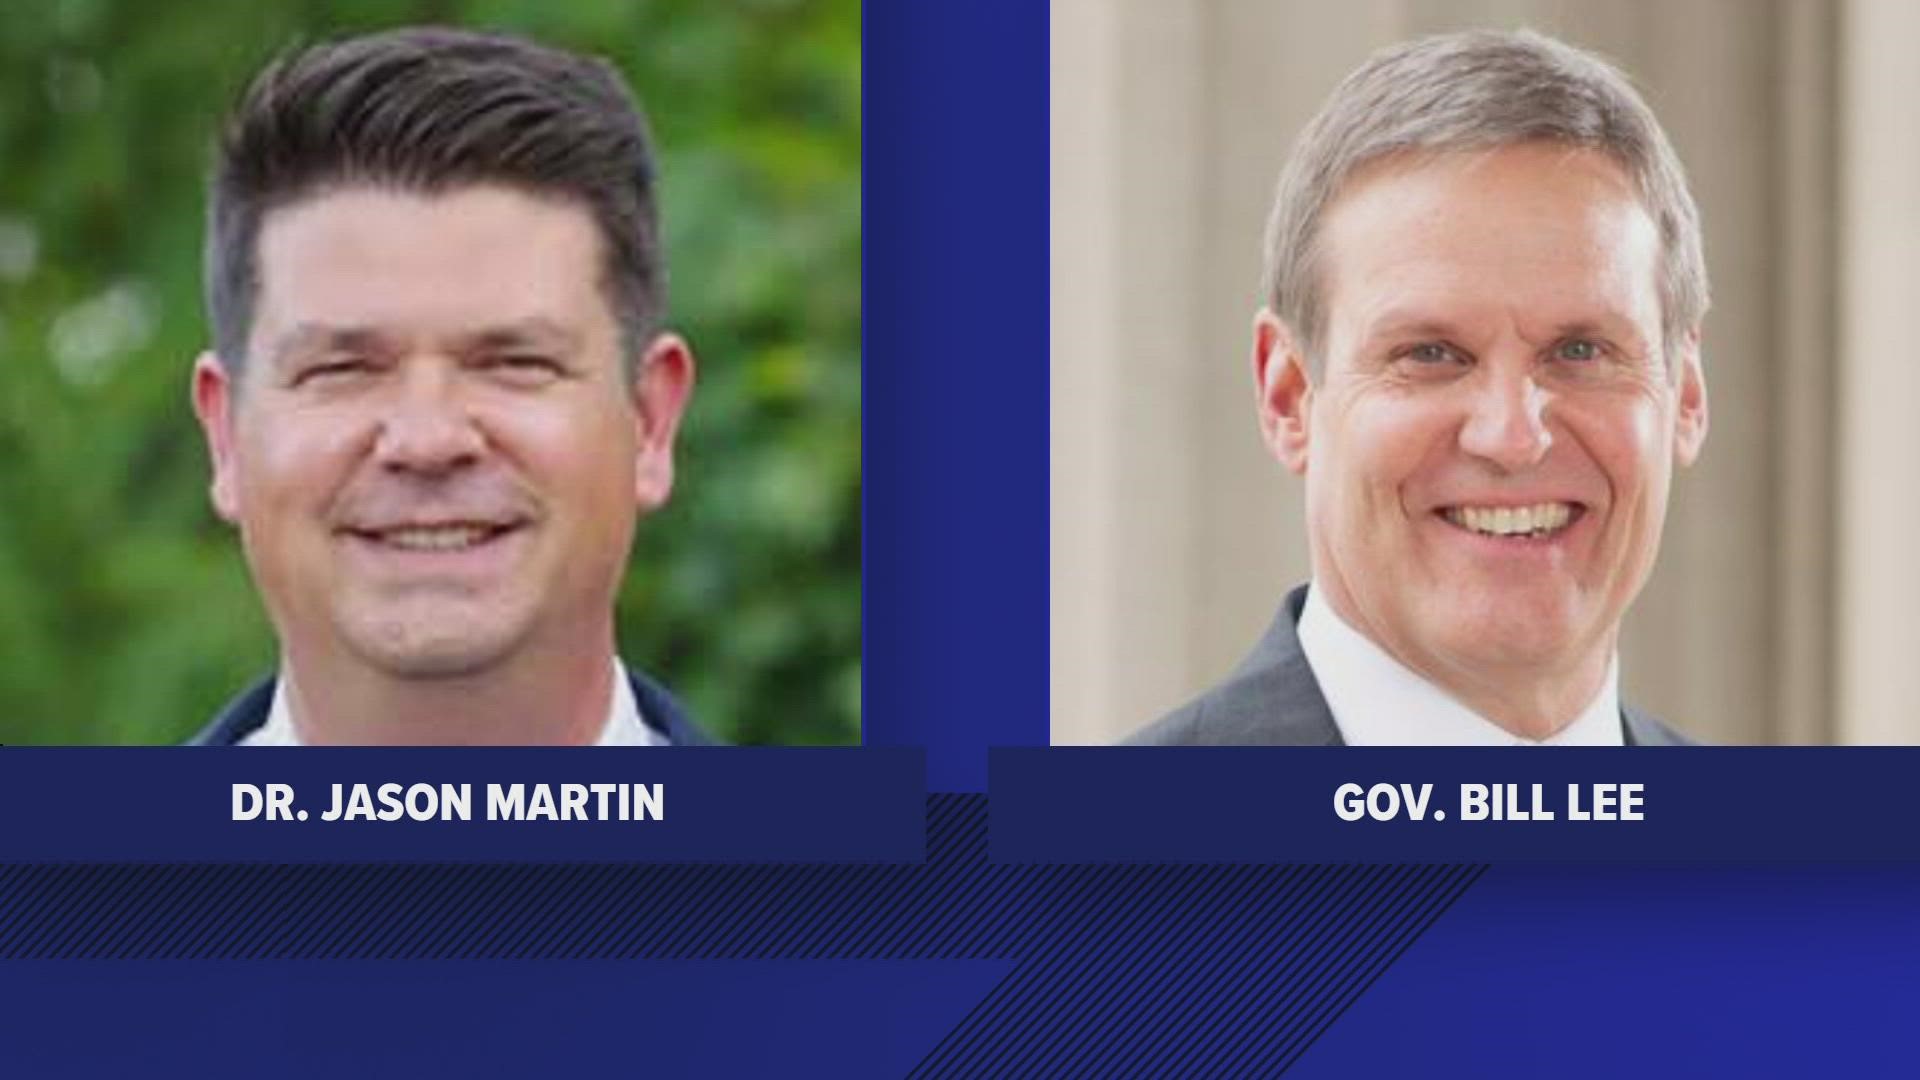 Tennessee Gov. Lee won't debate Jason Martin. Here's why 